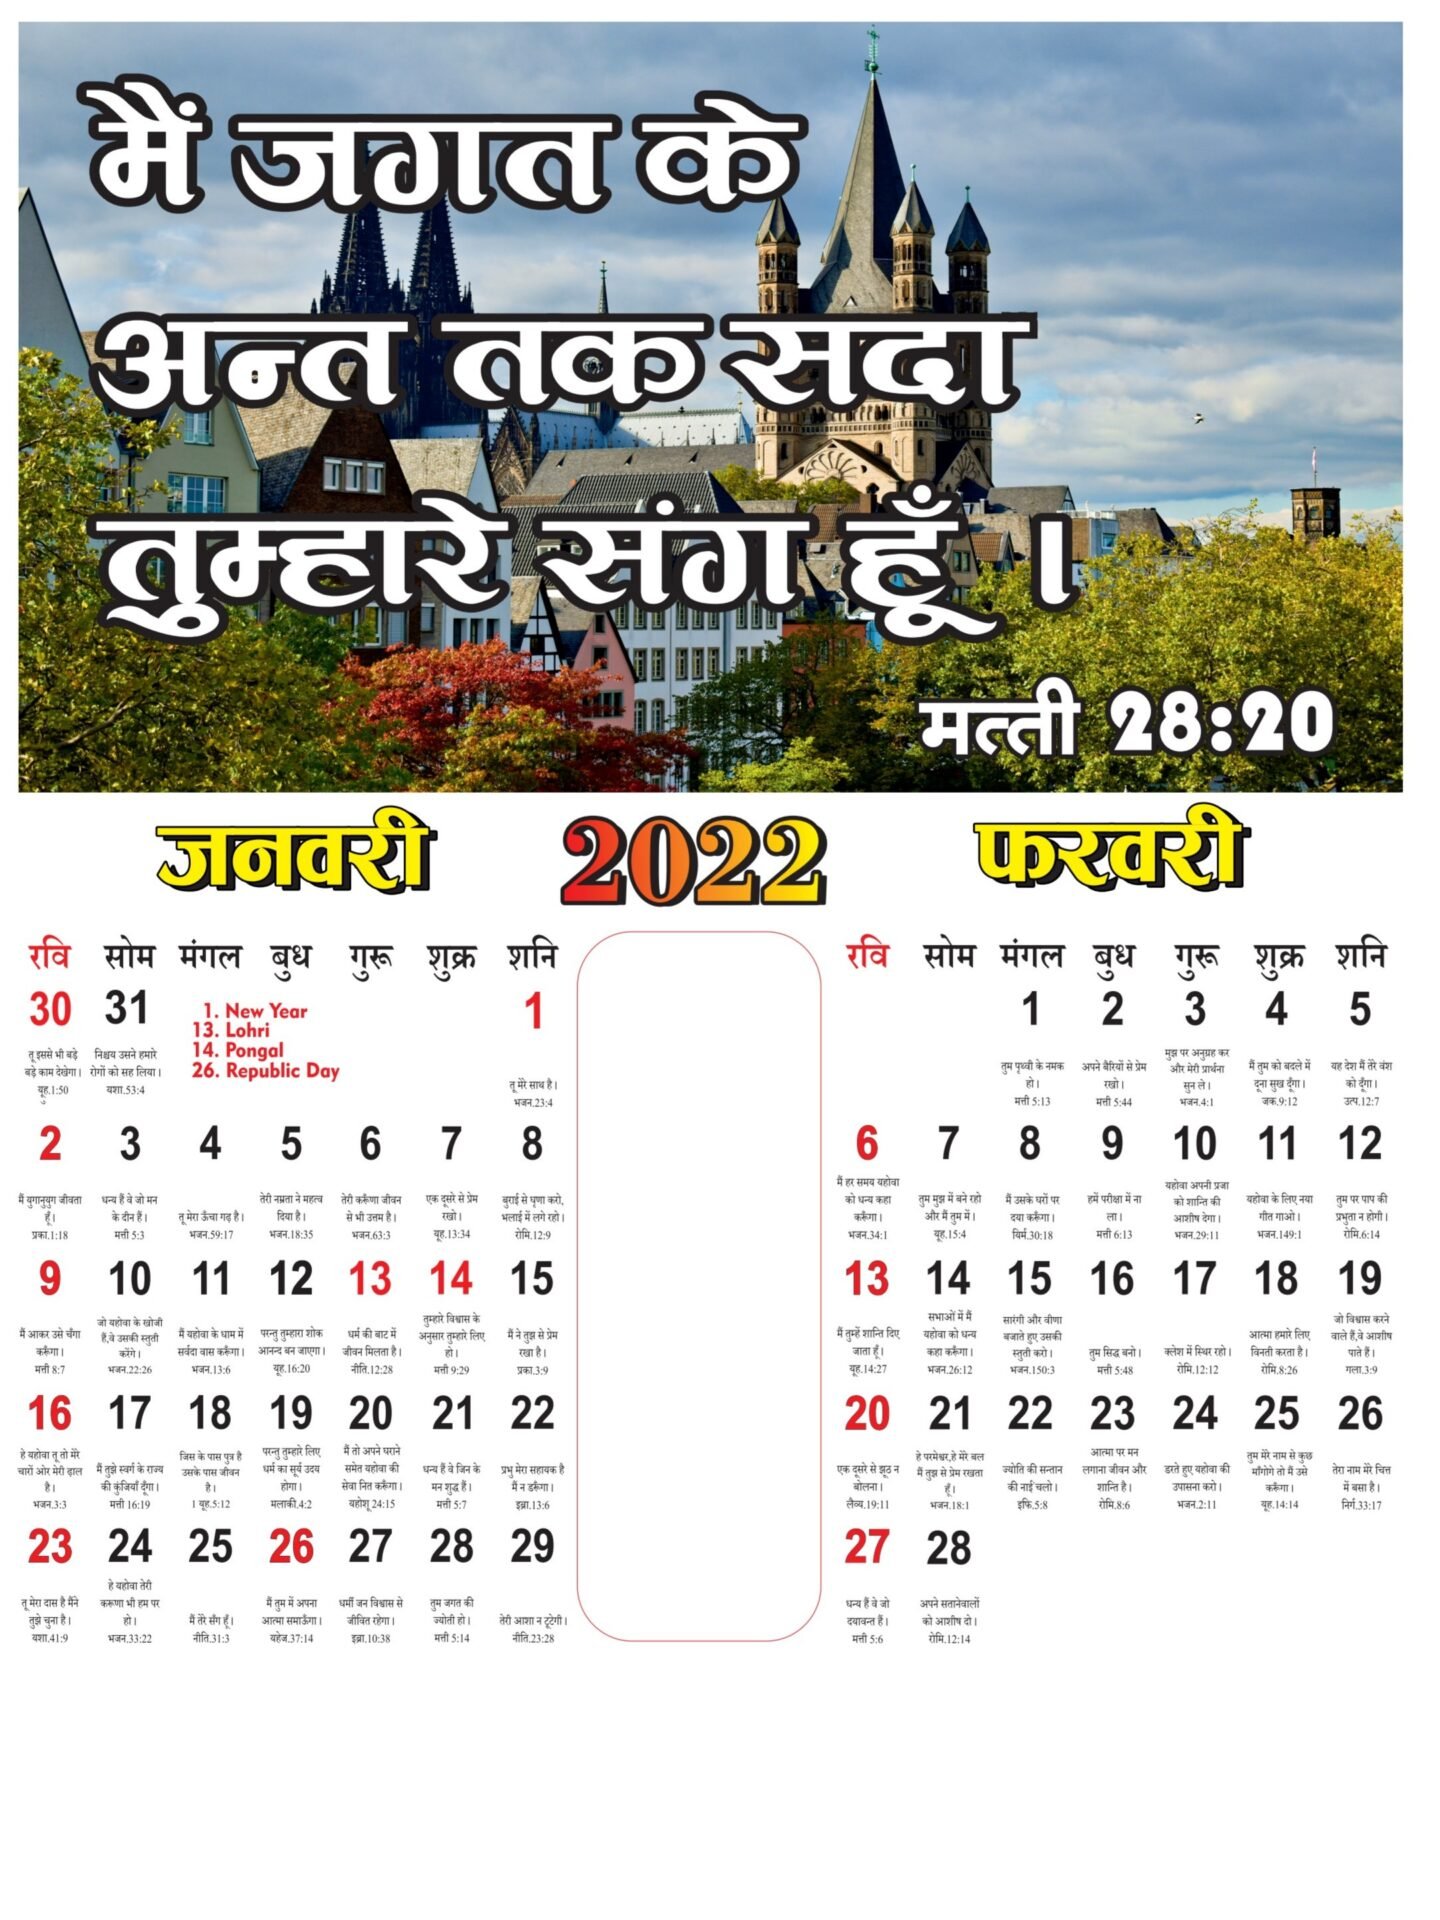 Christian Calendar 2022 2022 Hindi Christian Calendar, Pack Of: 5 - Christian